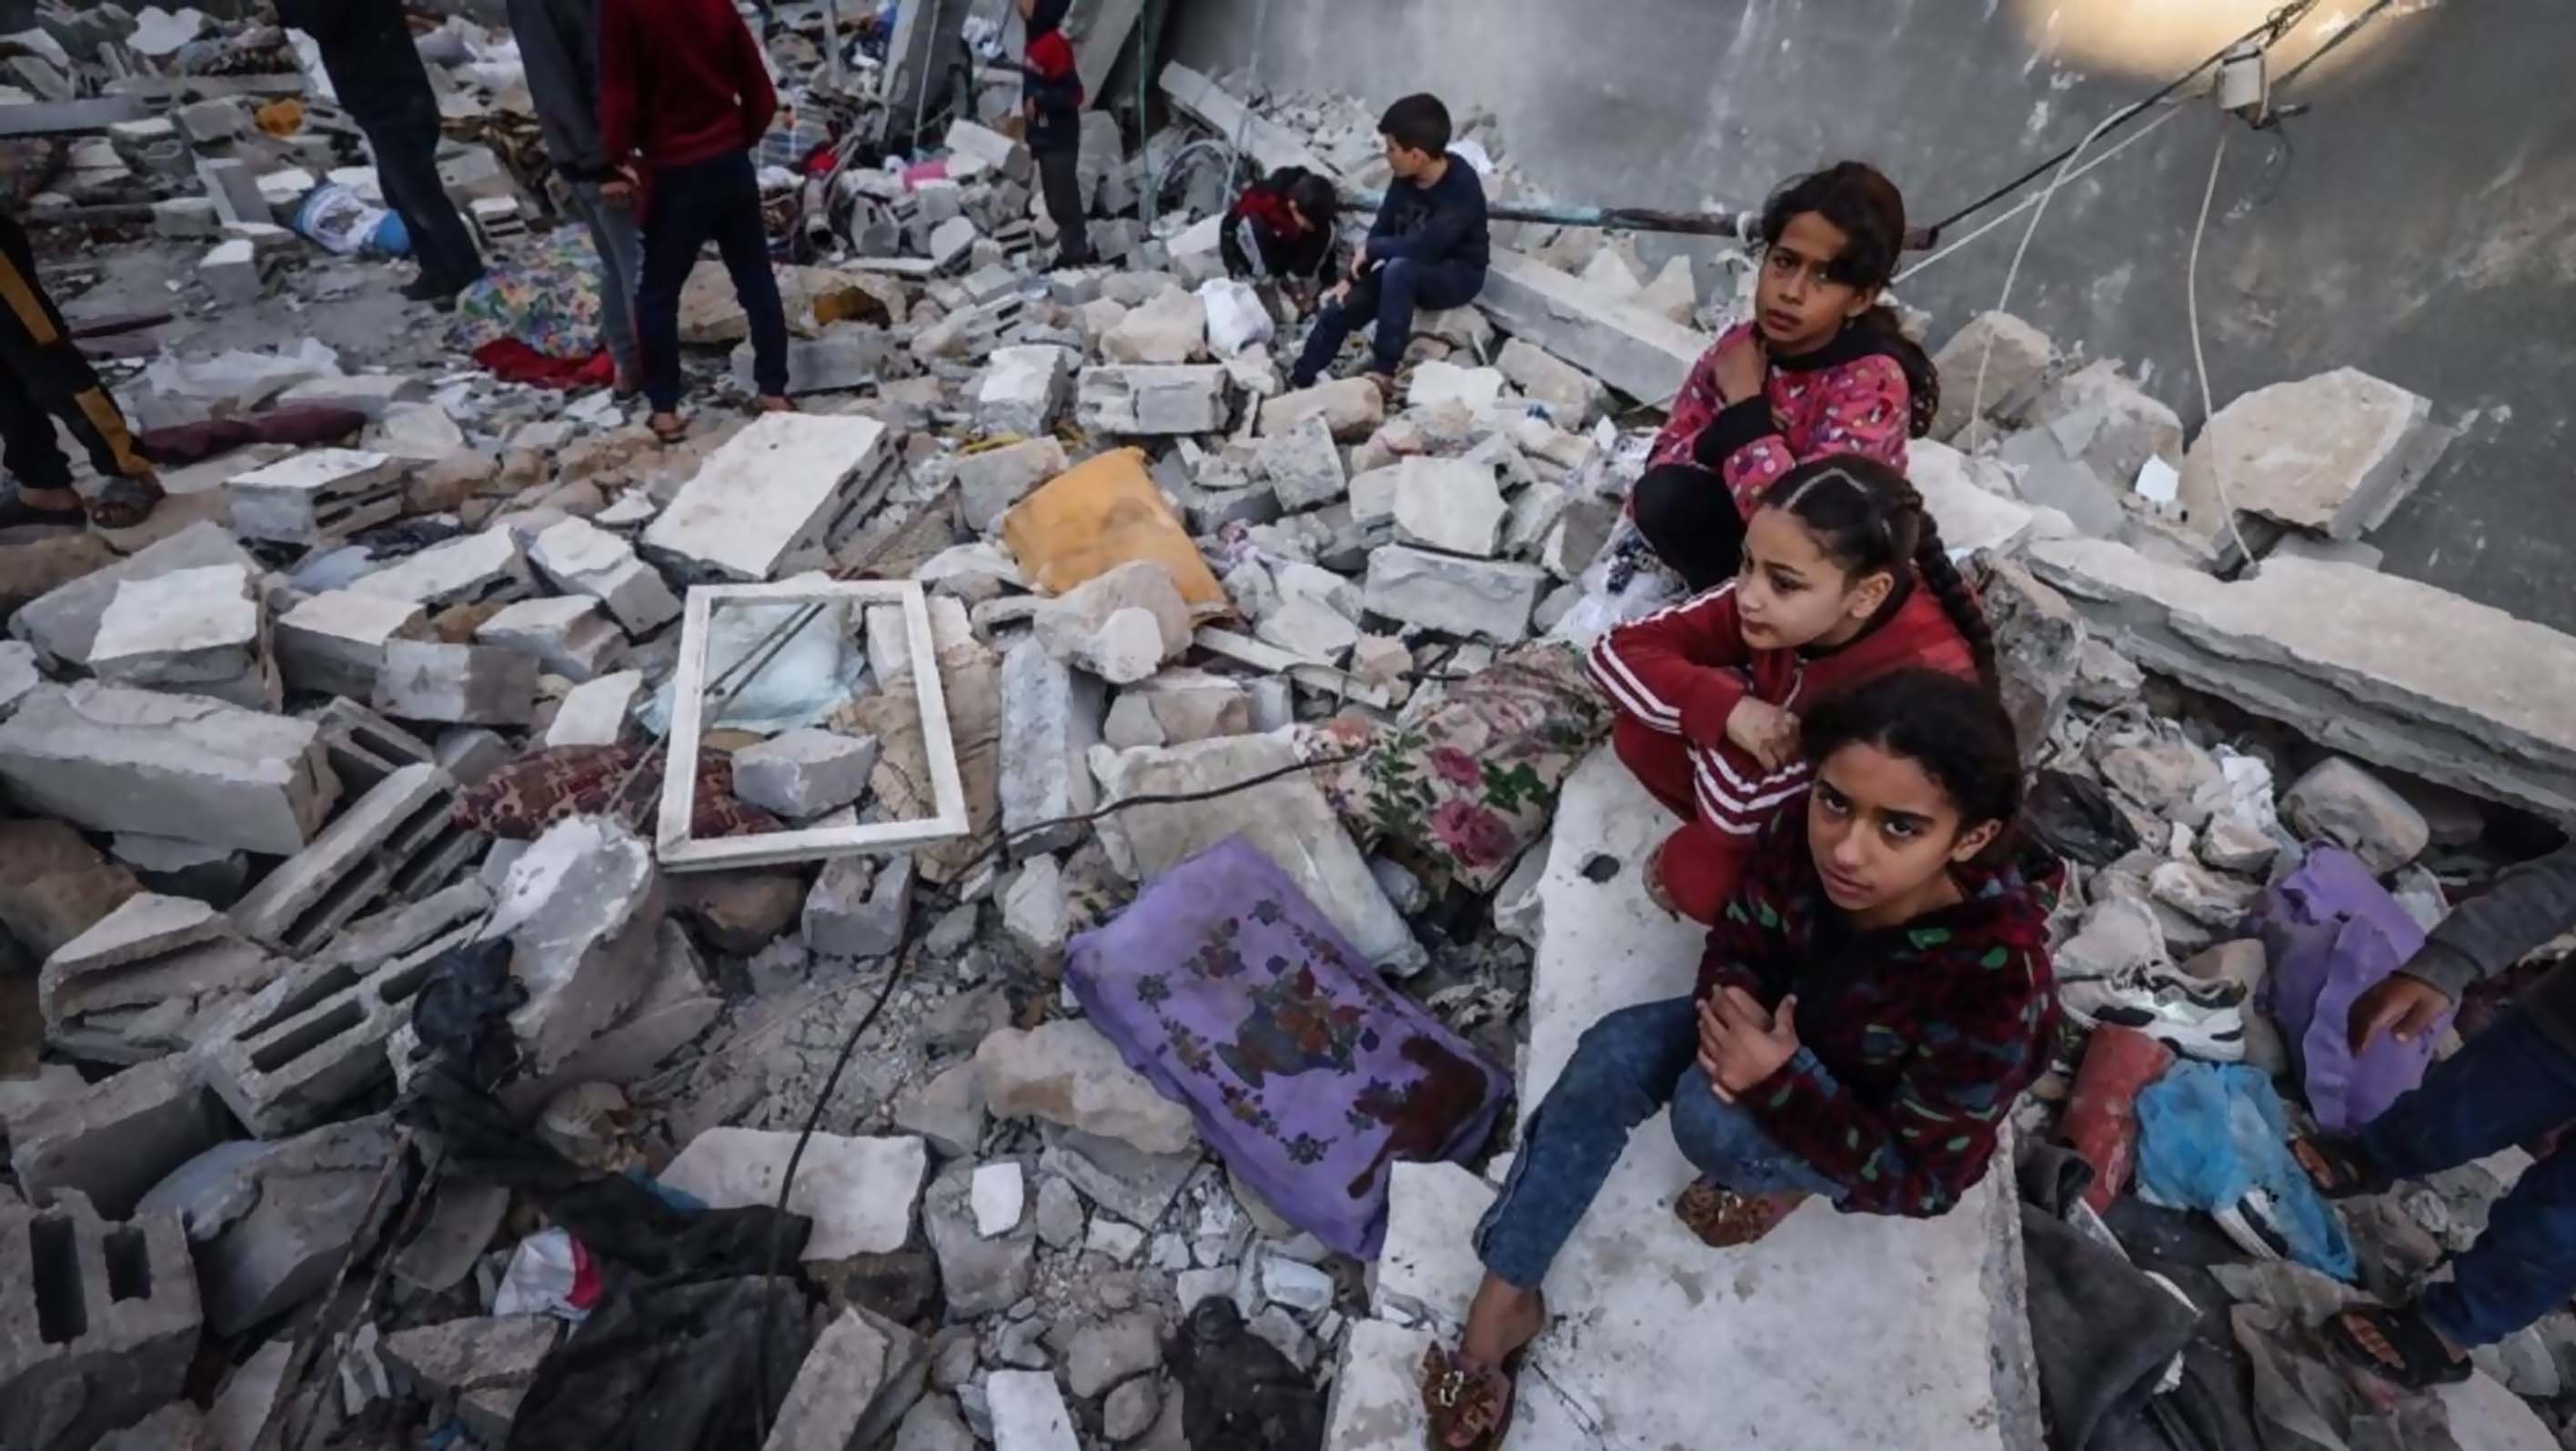 Tawakkol Karman: Gaza's resistance deals significant blow to European far right